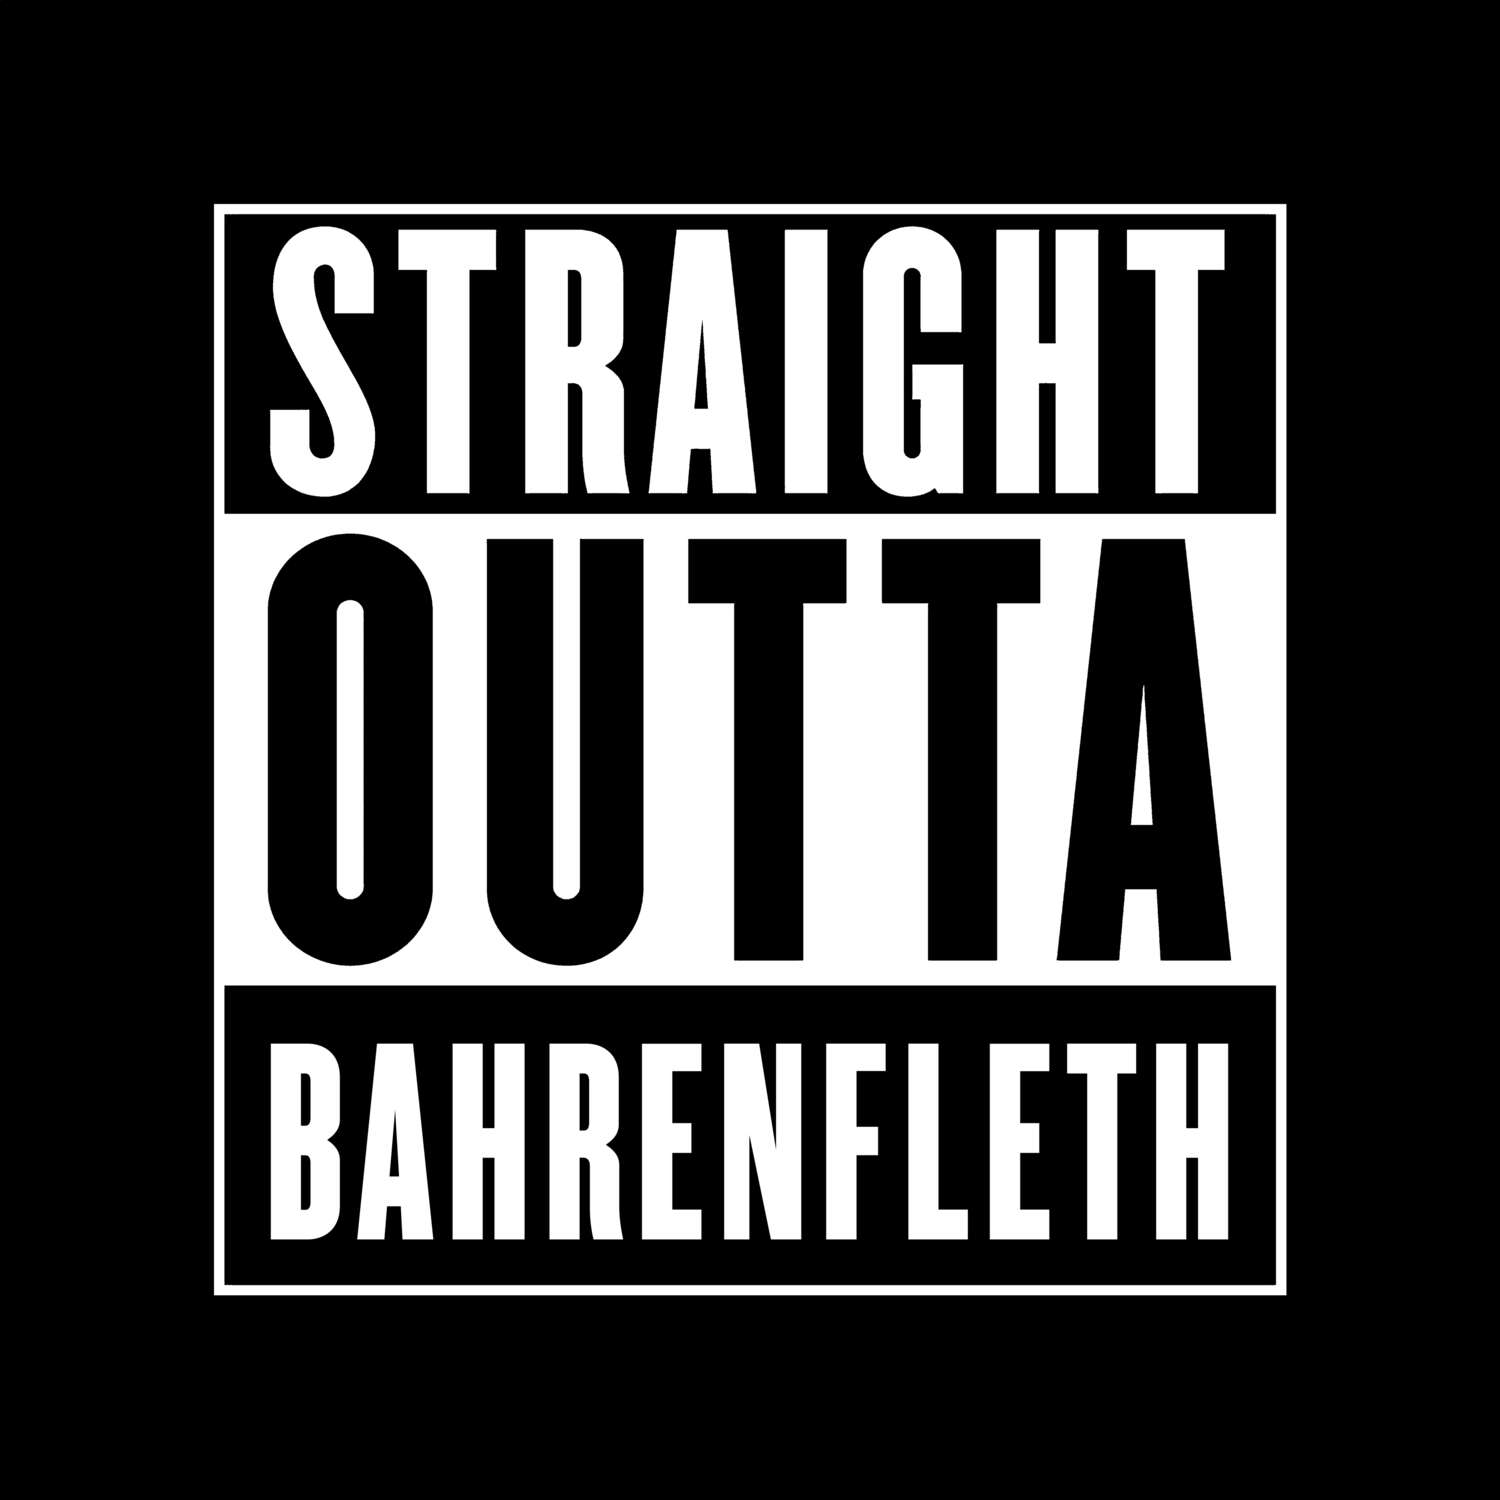 Bahrenfleth T-Shirt »Straight Outta«